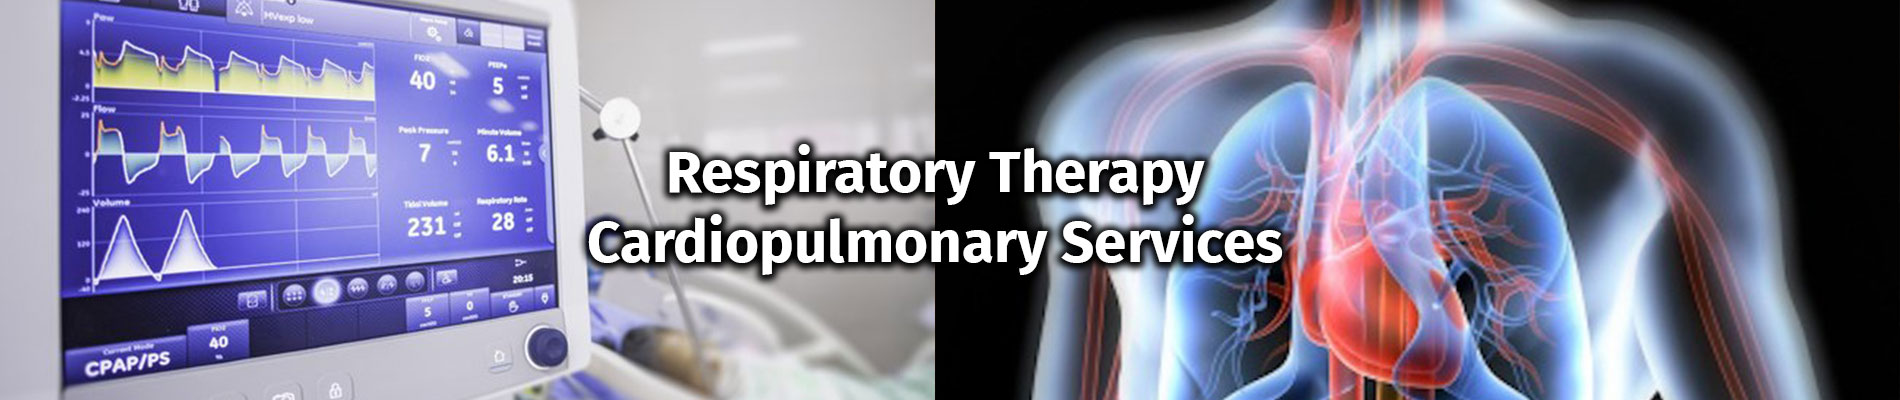 Respiratory Therapy/Cardiopulmonary Services